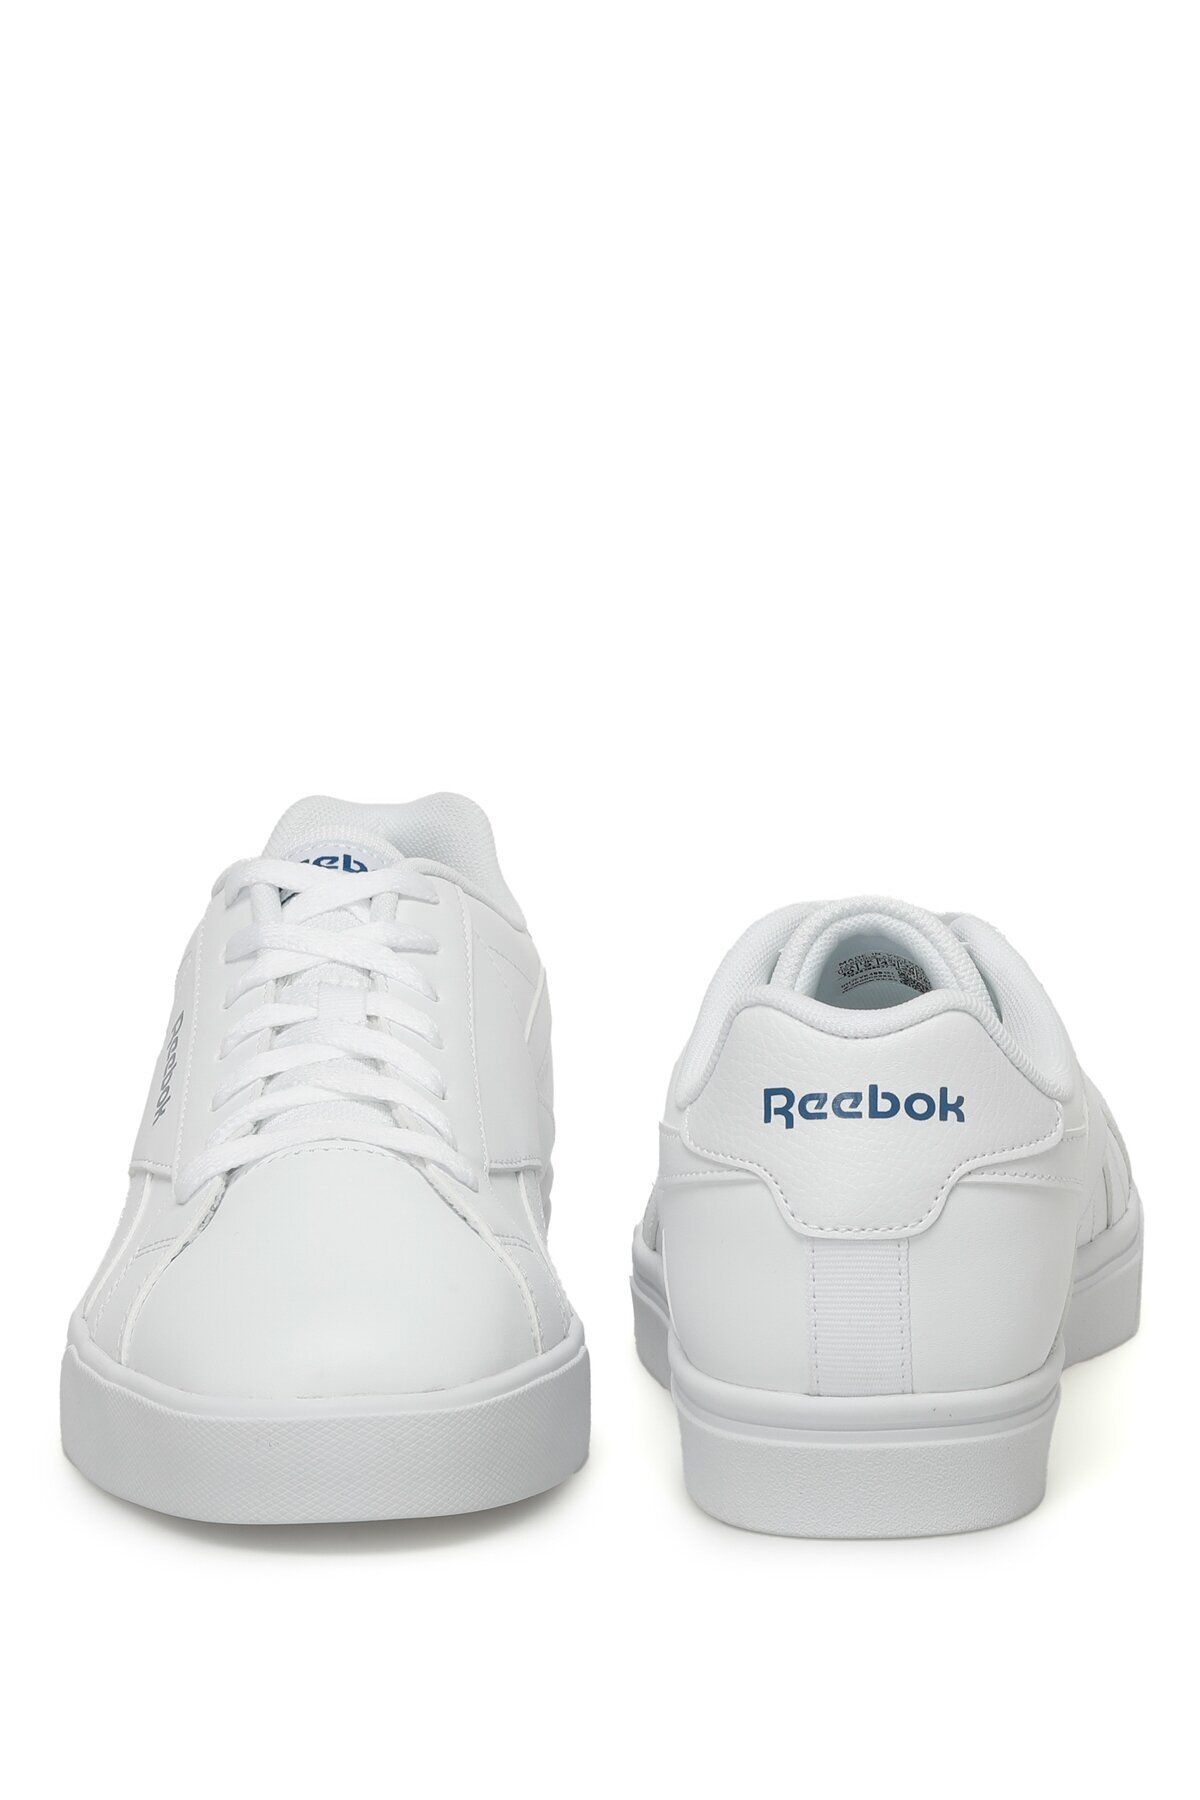 Reebok Royal Complete3low سفید یونیسکس کفش ورزشی